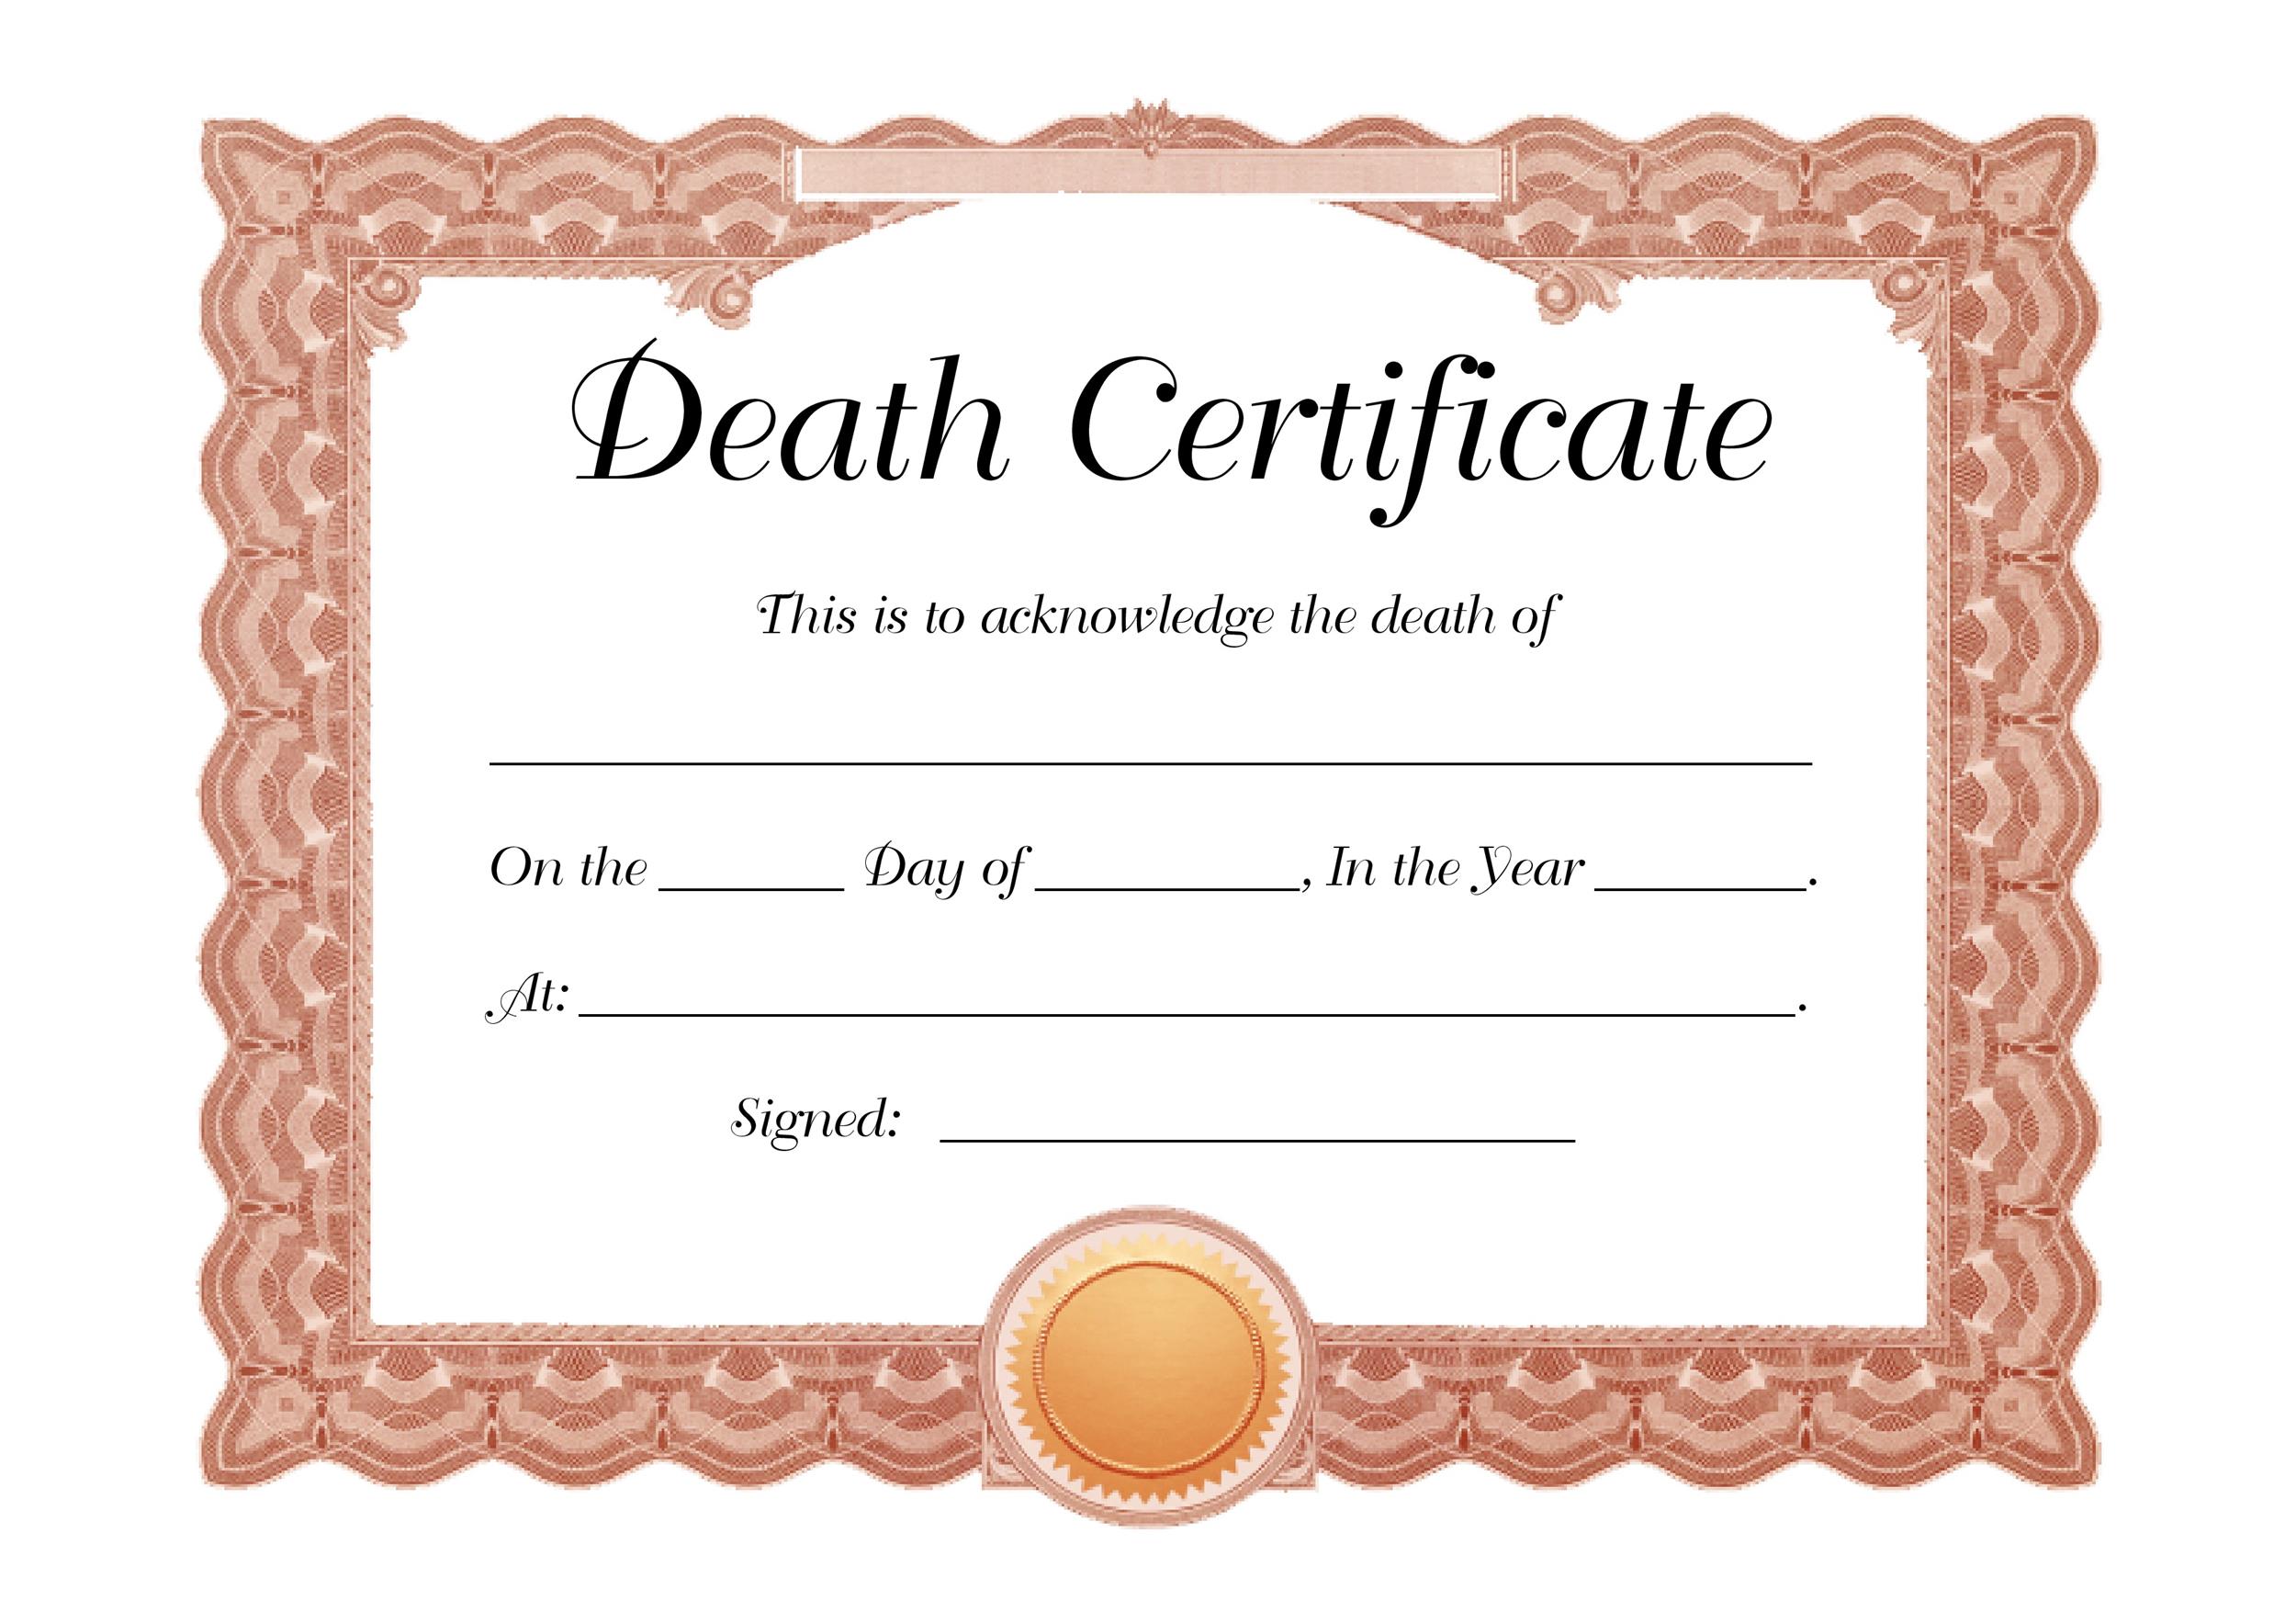 Death Certificate Template Microsoft Word